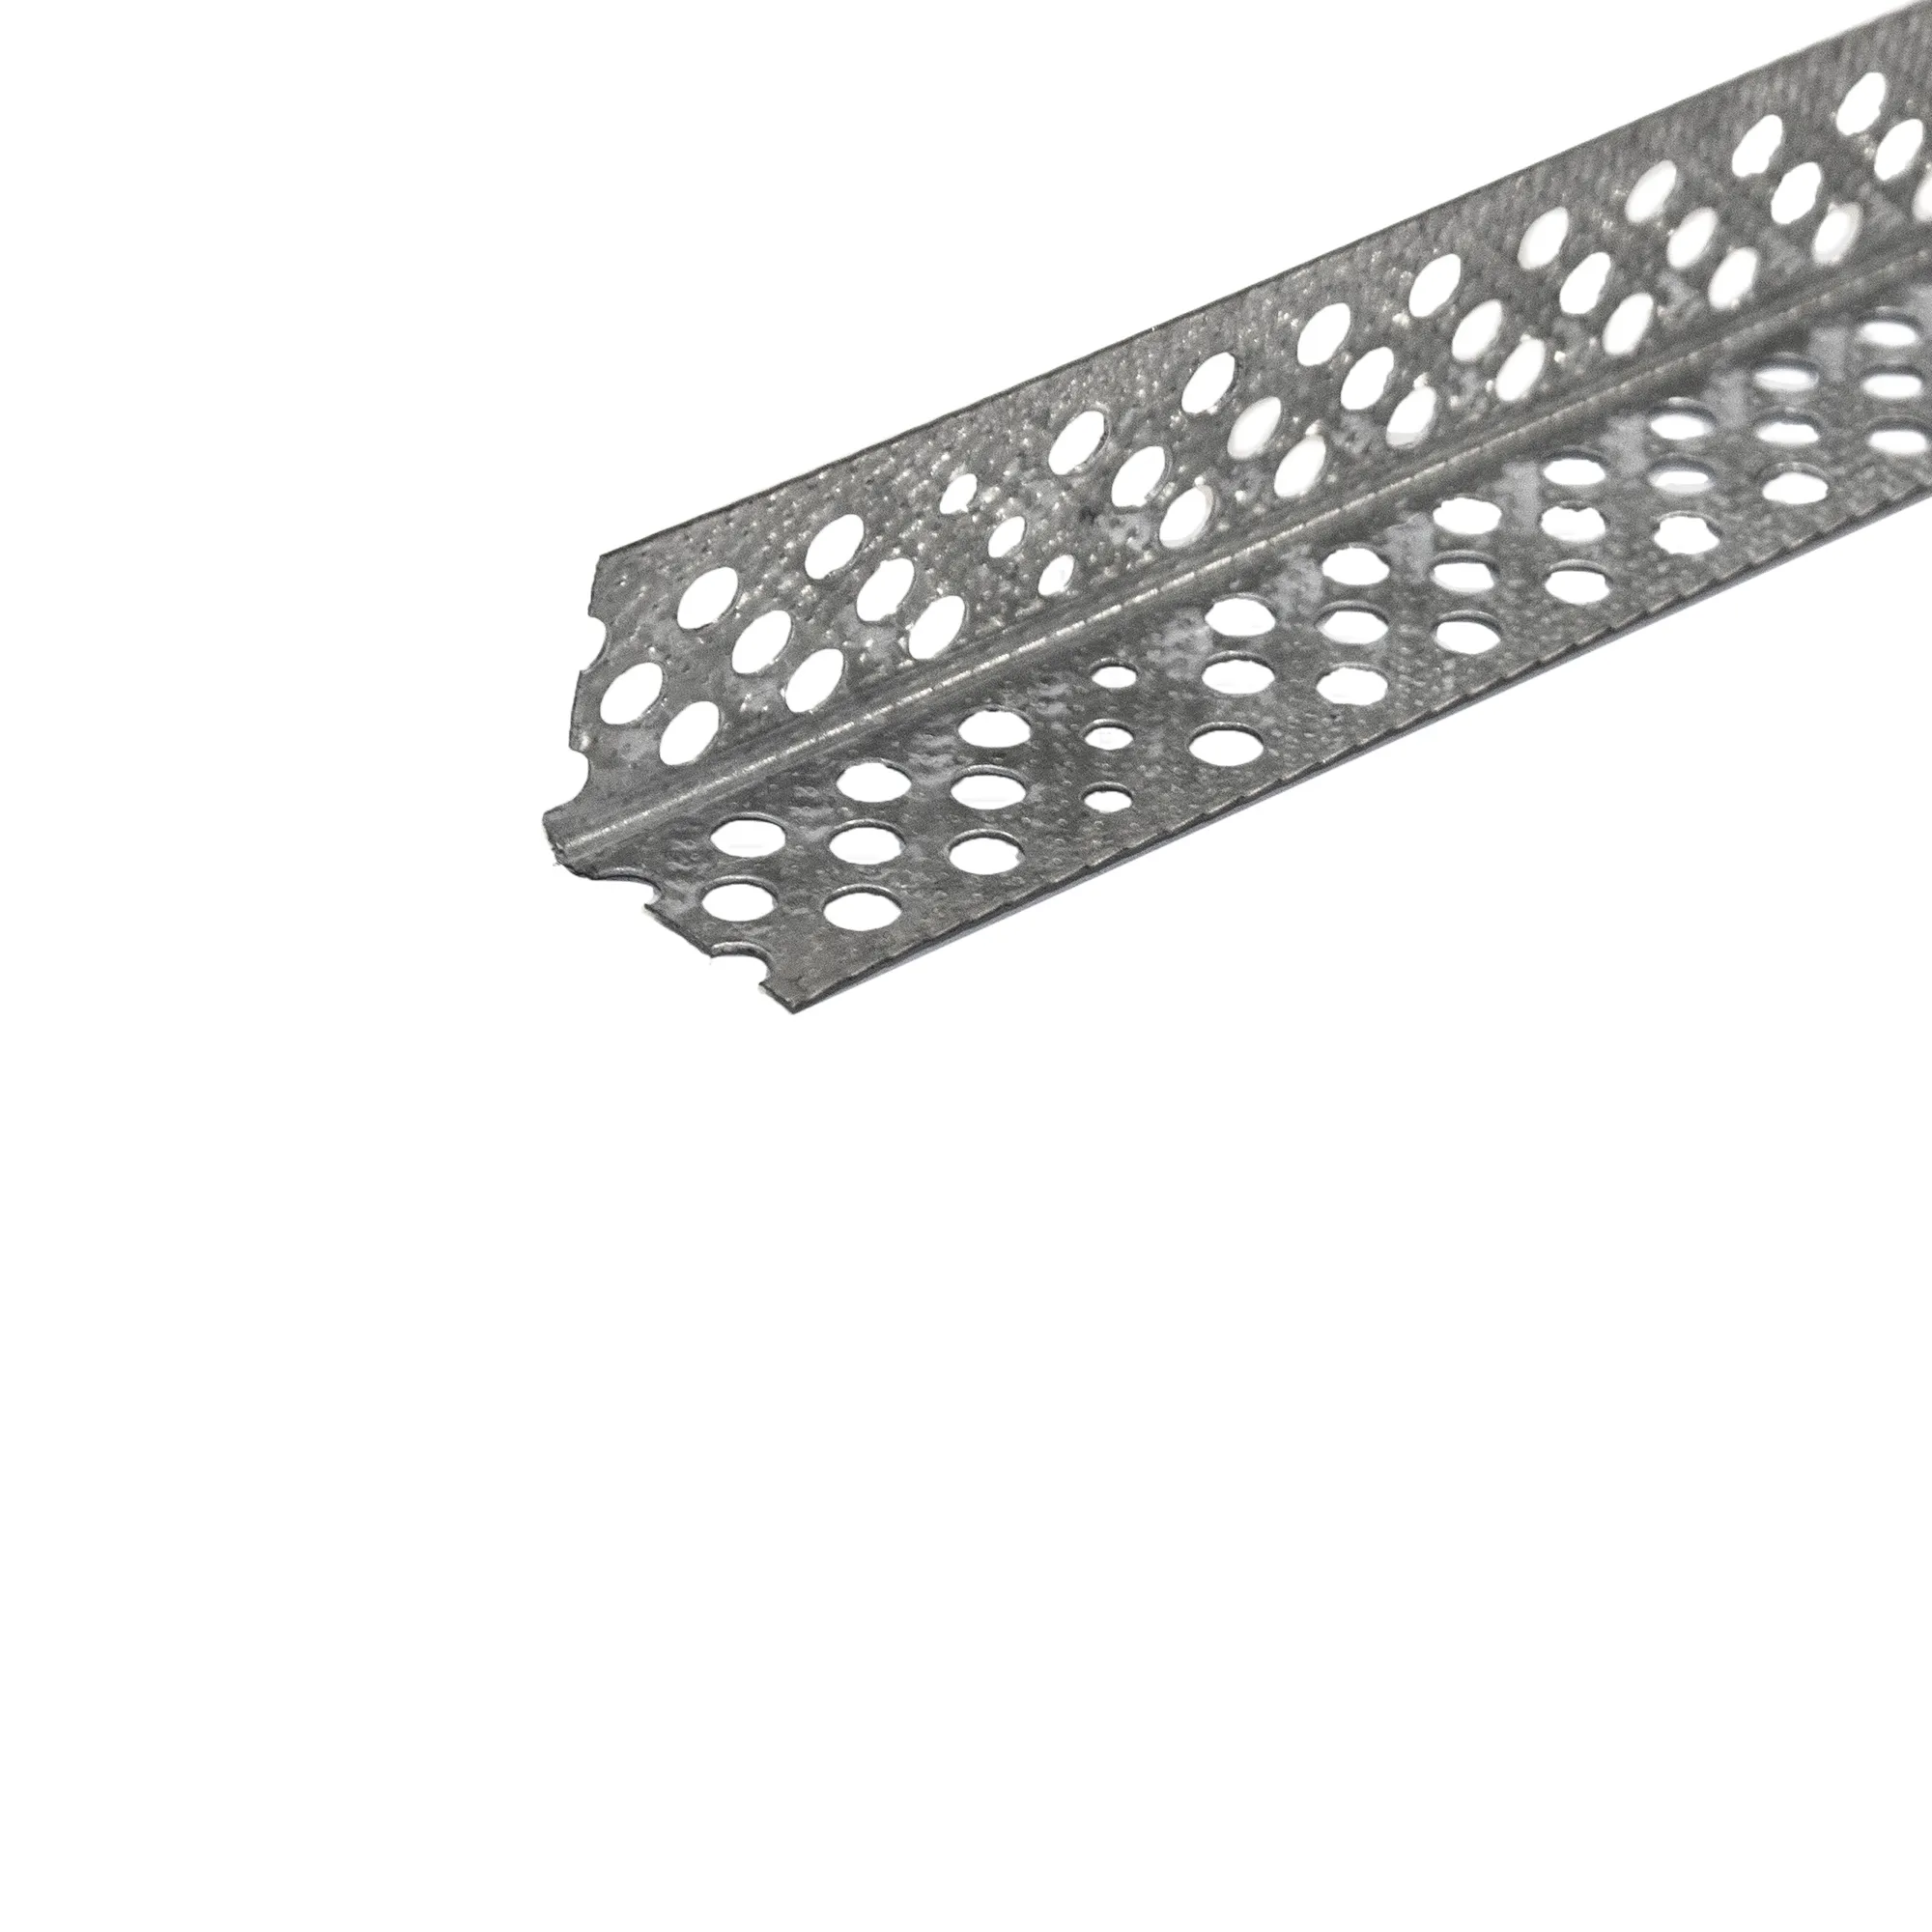 प्लास्टरबोर्ड जिप्सम बोर्ड के लिए ड्राईवॉल लाइट स्टील कील्स ड्राईवॉल विभाजन प्रणाली गैल्वेनाइज्ड स्टील प्रोफाइल